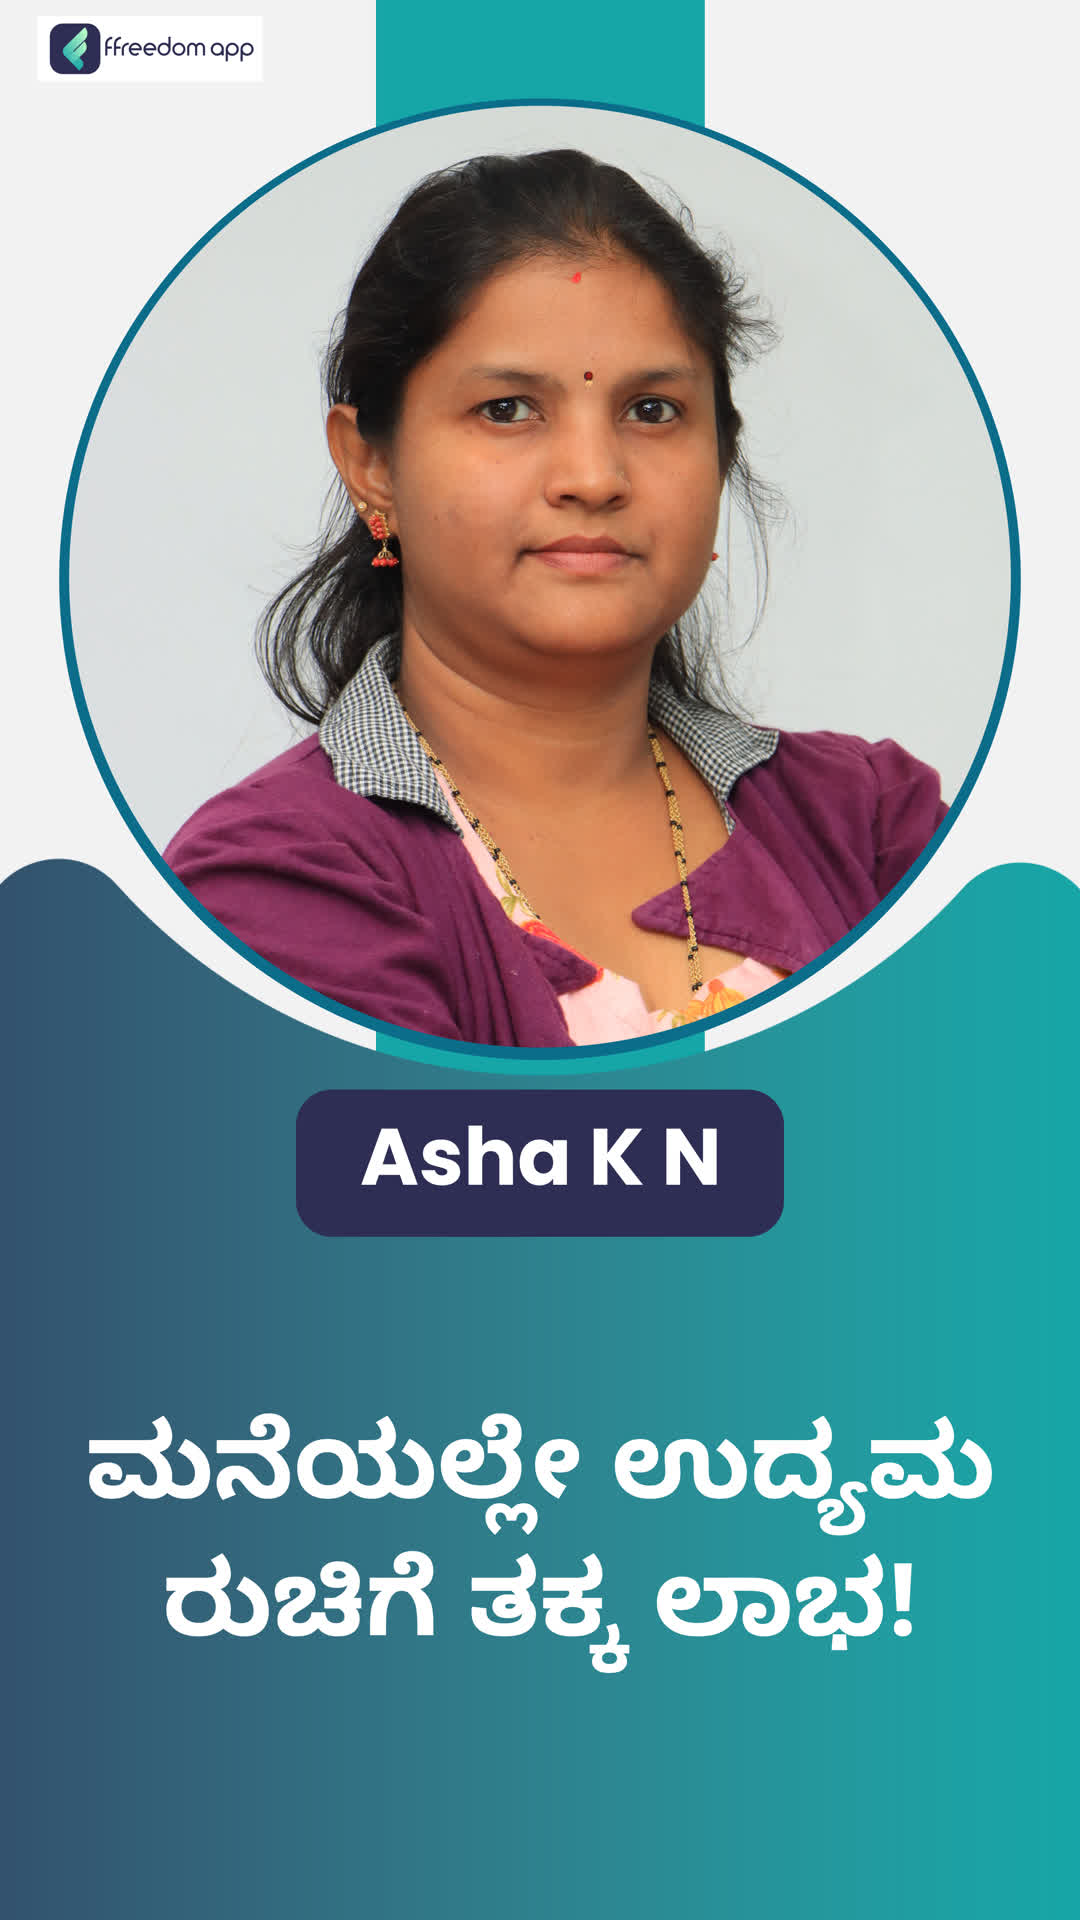 Asha K N's Honest Review of ffreedom app - Bengaluru City ,Karnataka